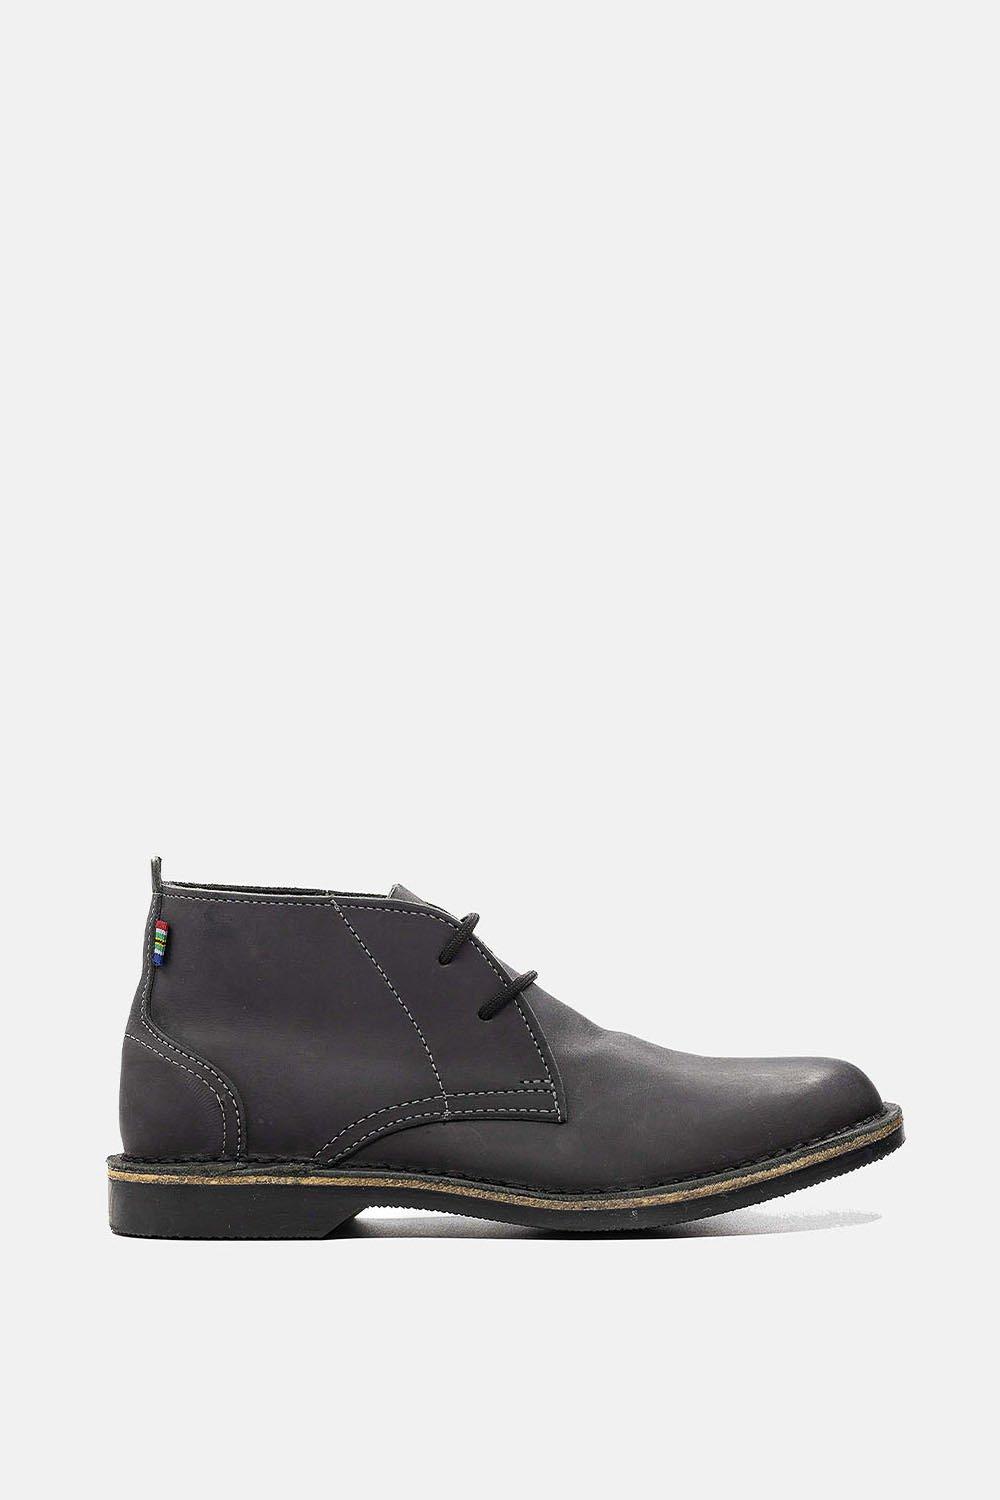 Кожаные ботинки чукка Veldskoen Shoes, черный кроссовки levi s woodward rugged chukka dark brown